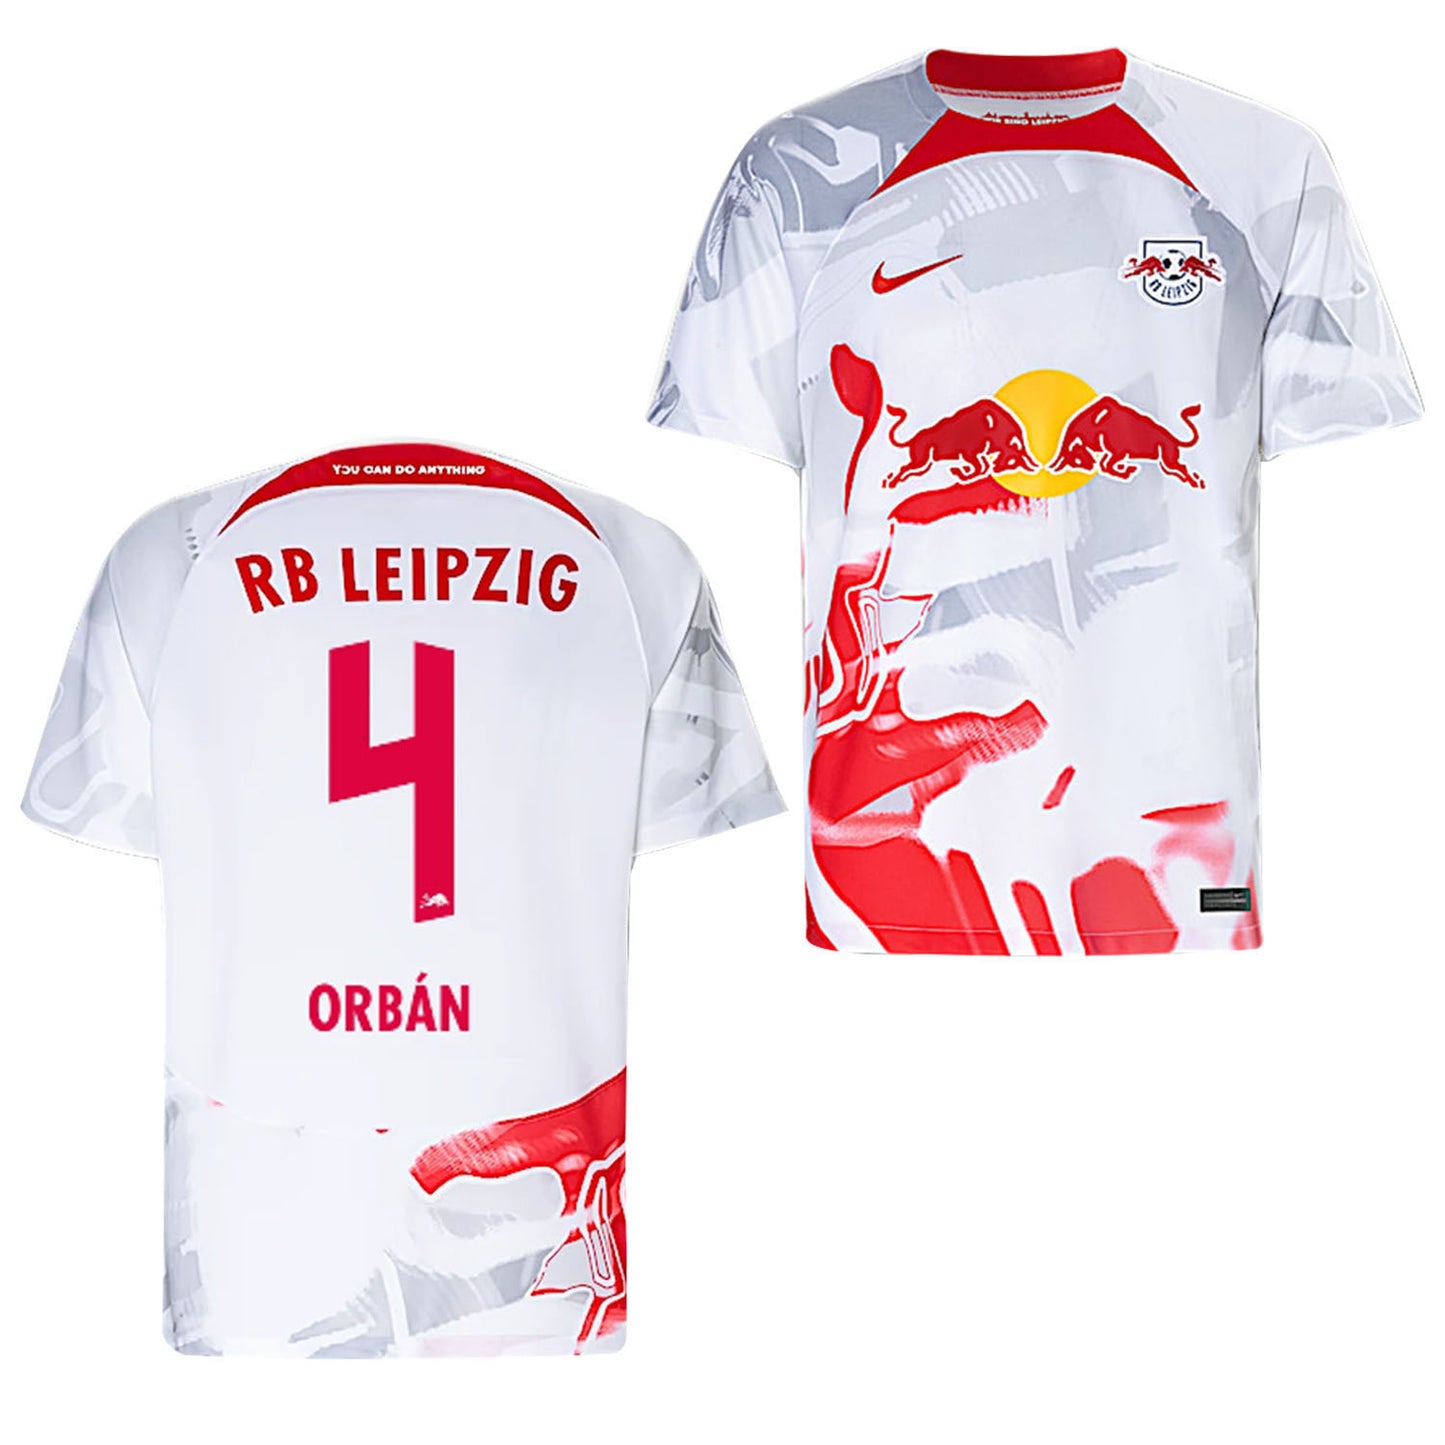 Willi Orban RB Leipzig 4 Jersey